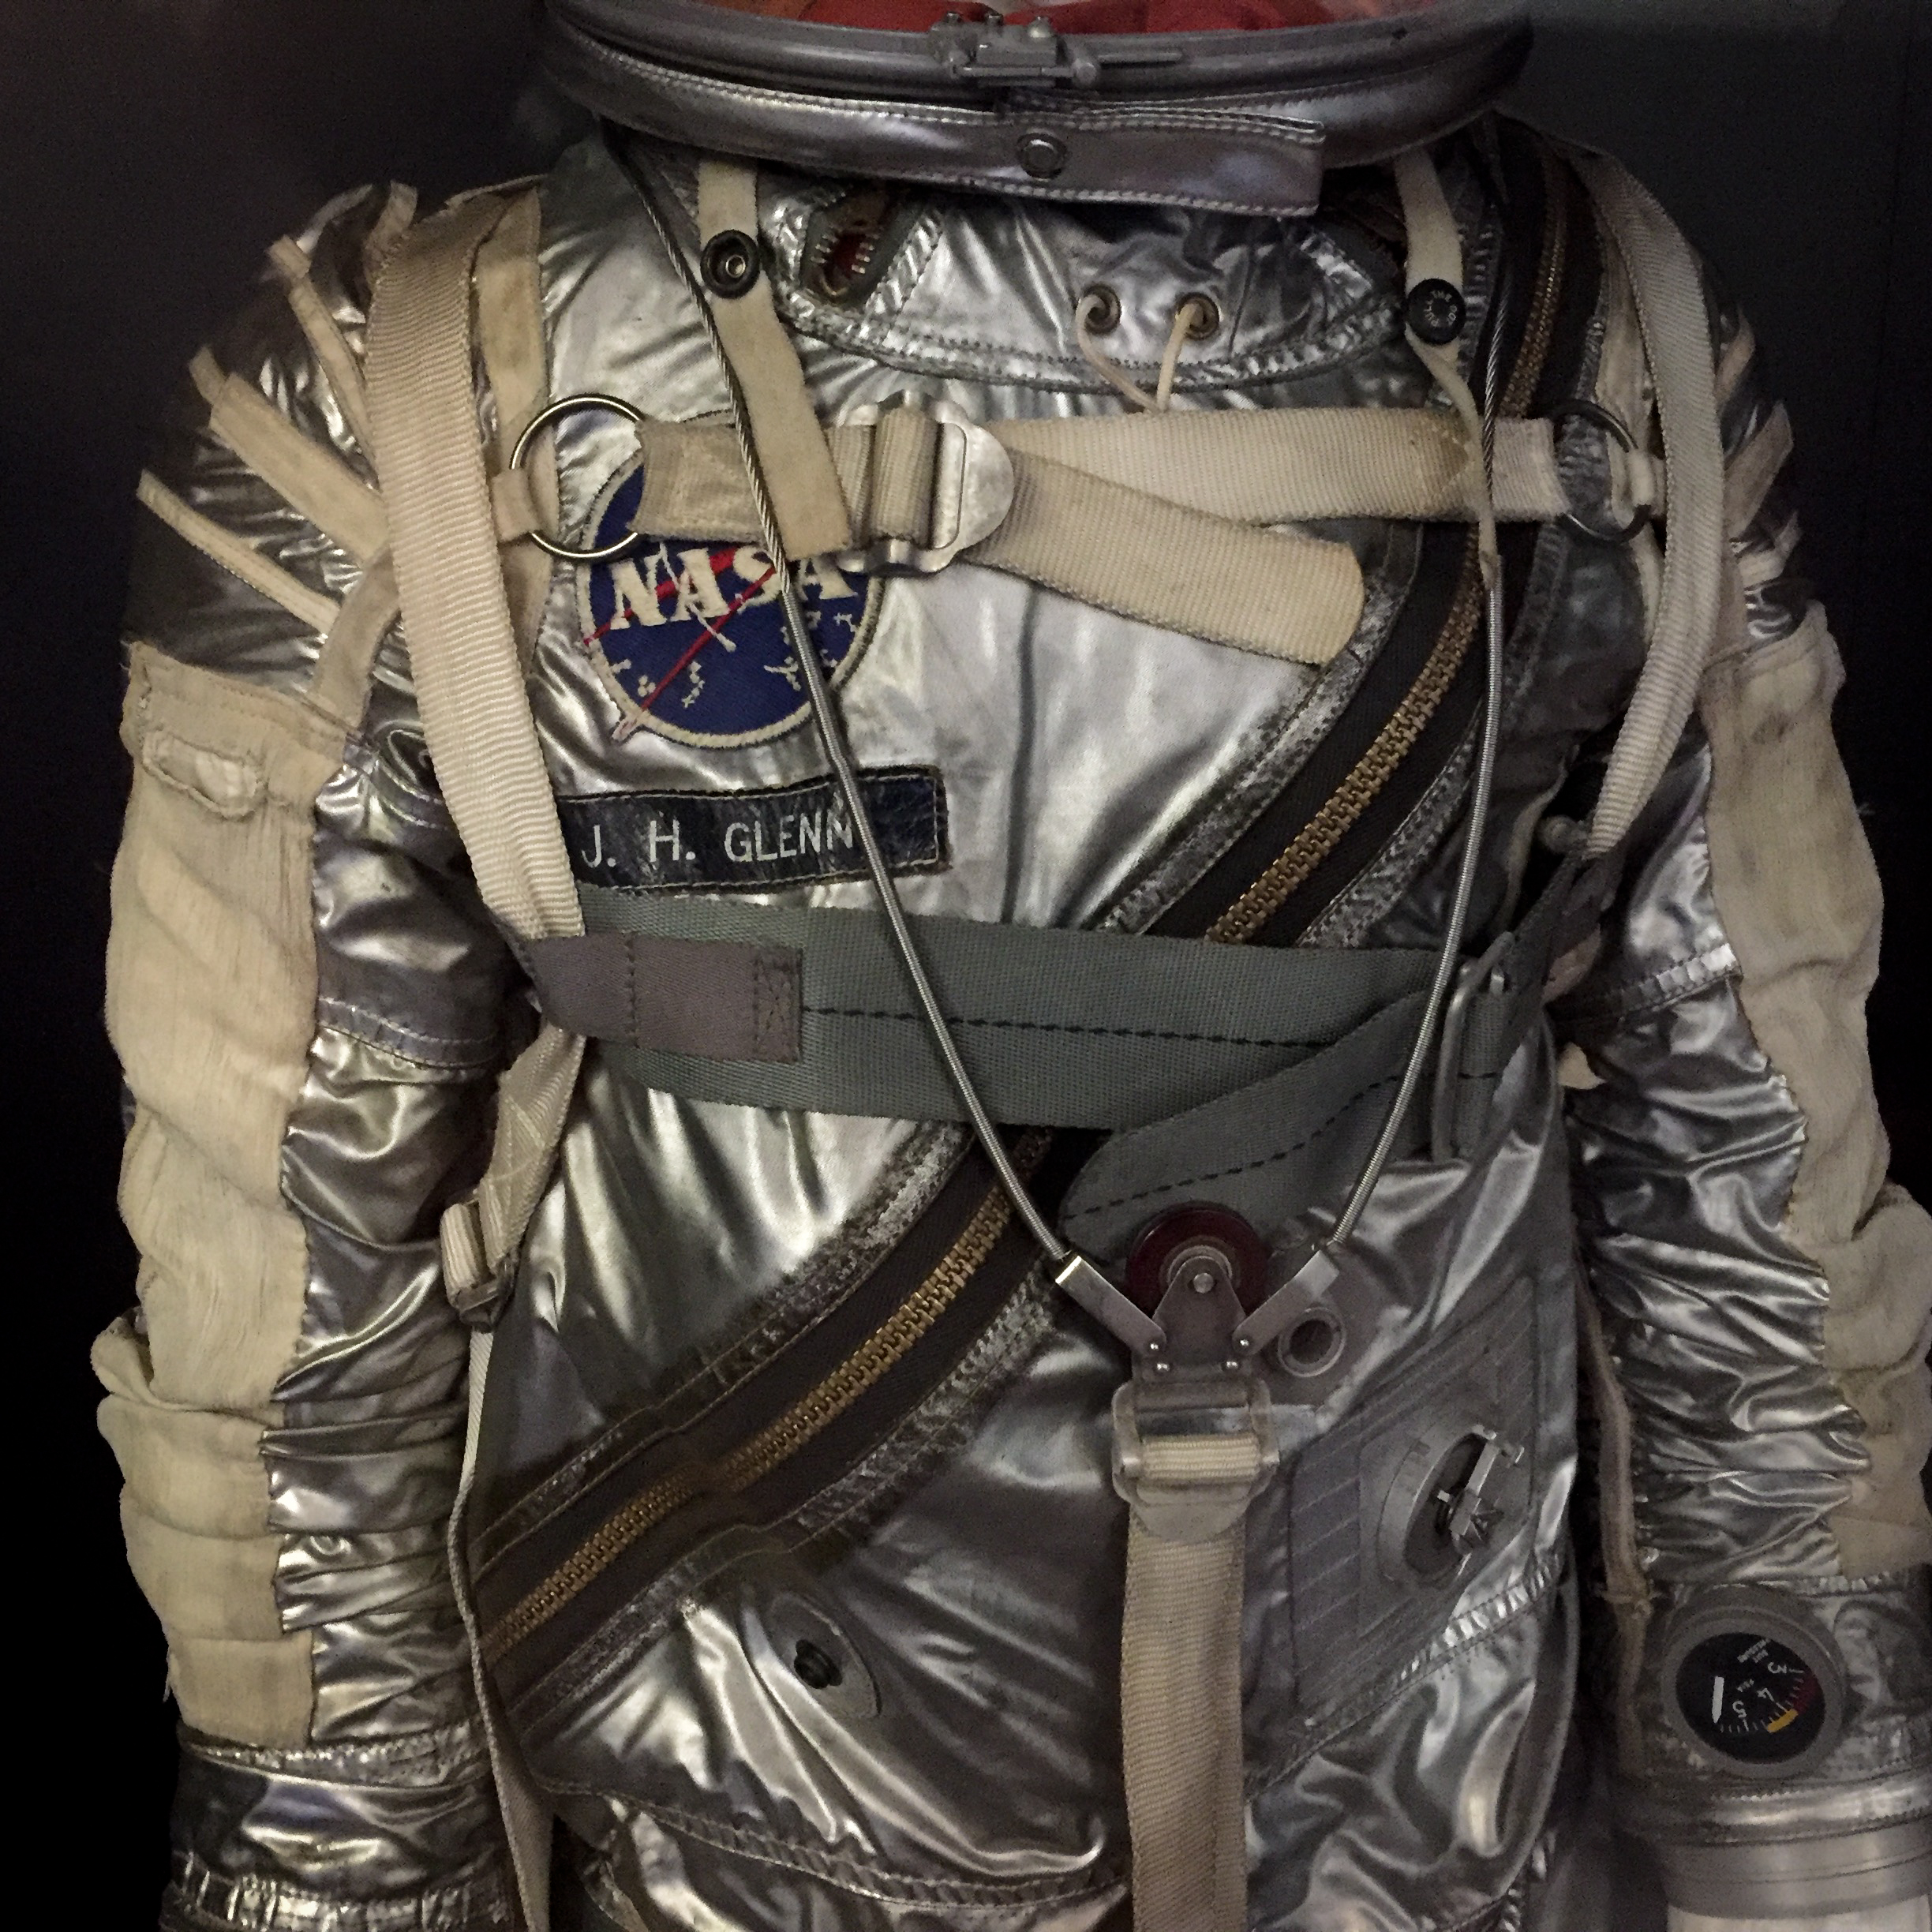 John Glenn's Mercury Spacesuit